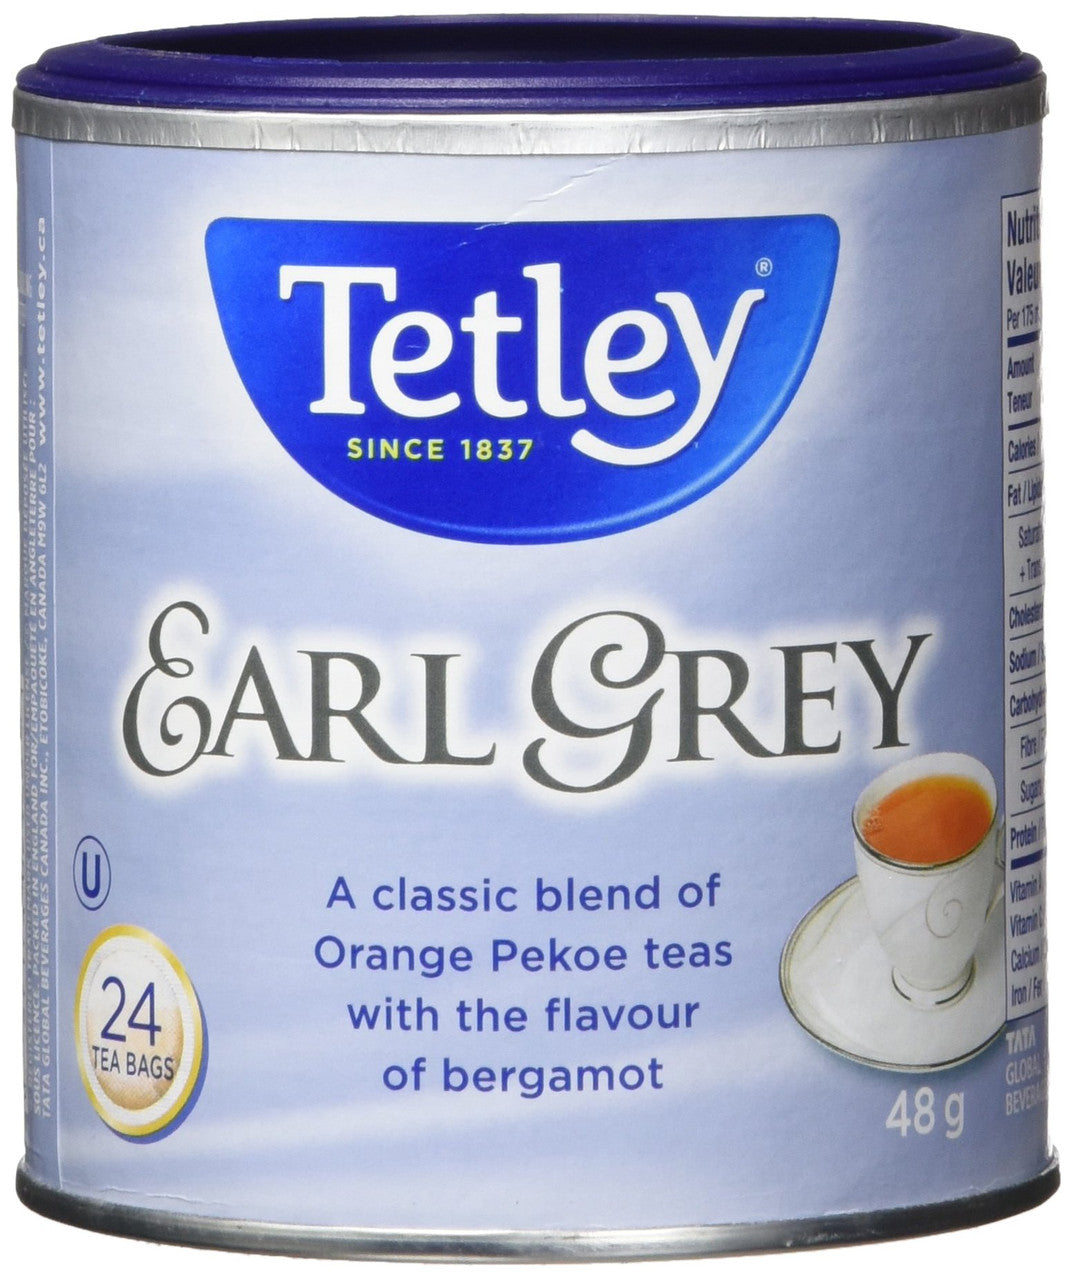 Tetley Earl Grey Tea, 24 tea bags, 48g/1.69oz, (Imported from Canada)